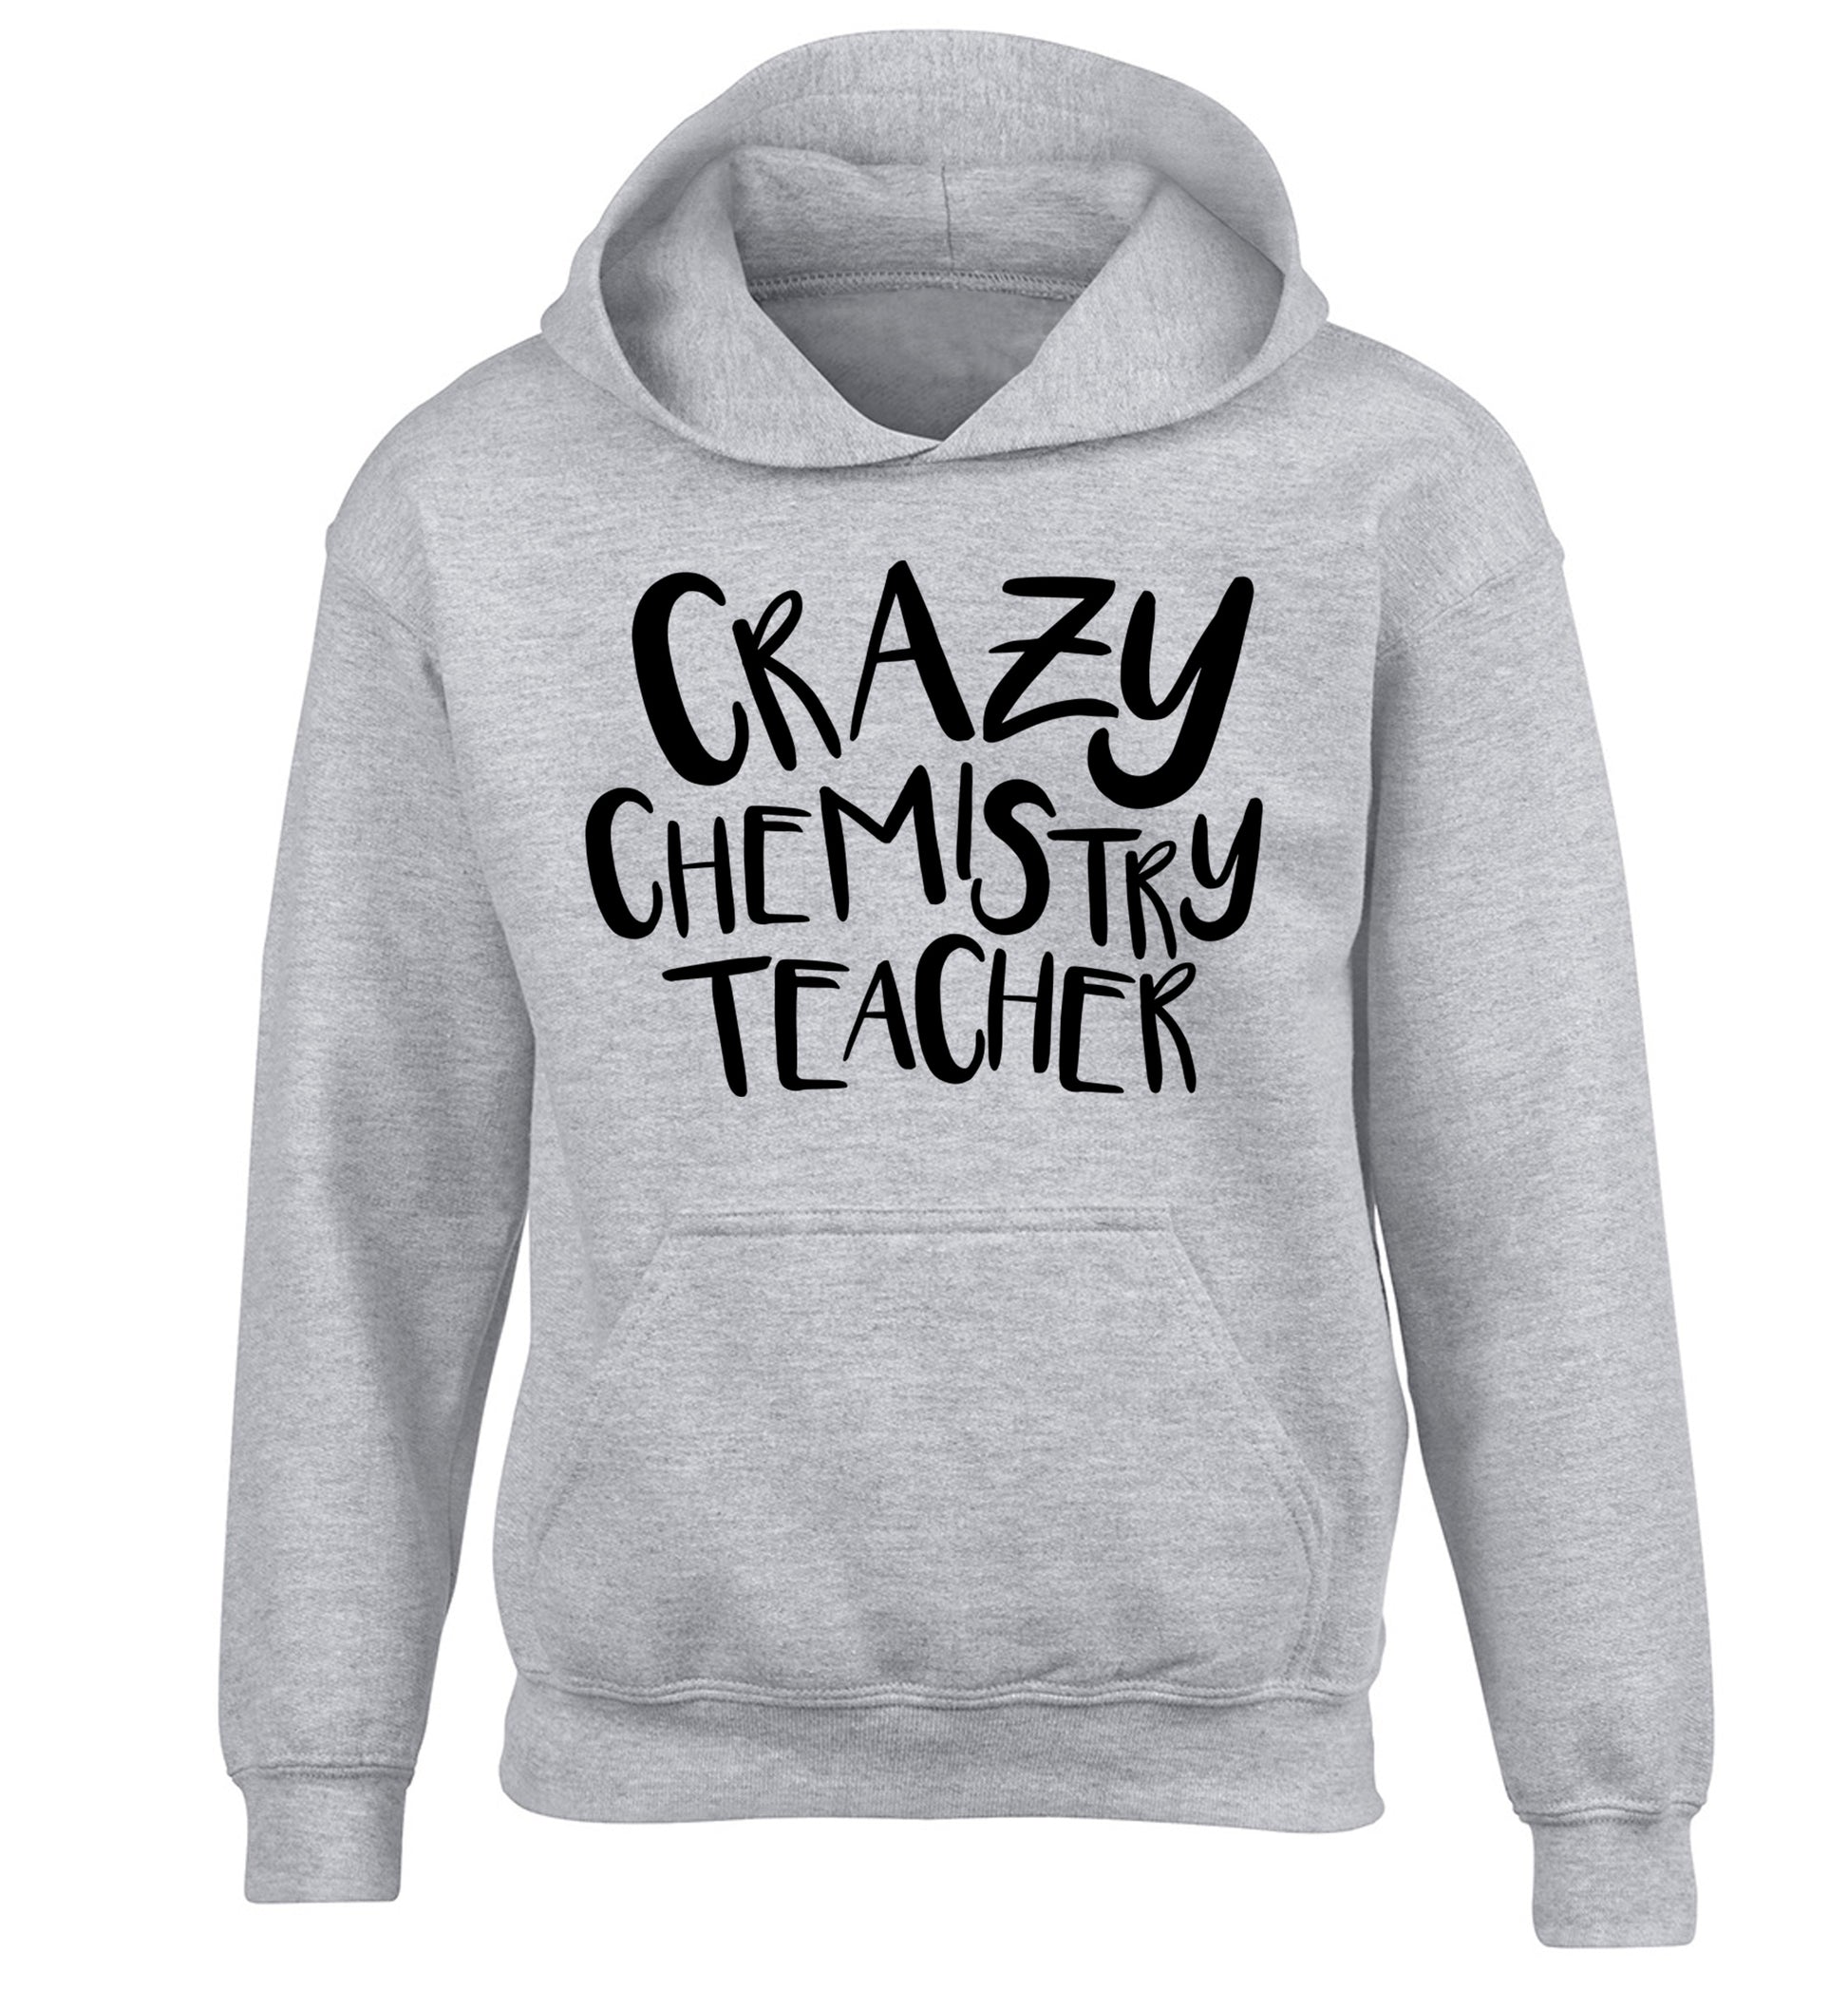 Crazy chemistry teacher children's grey hoodie 12-13 Years